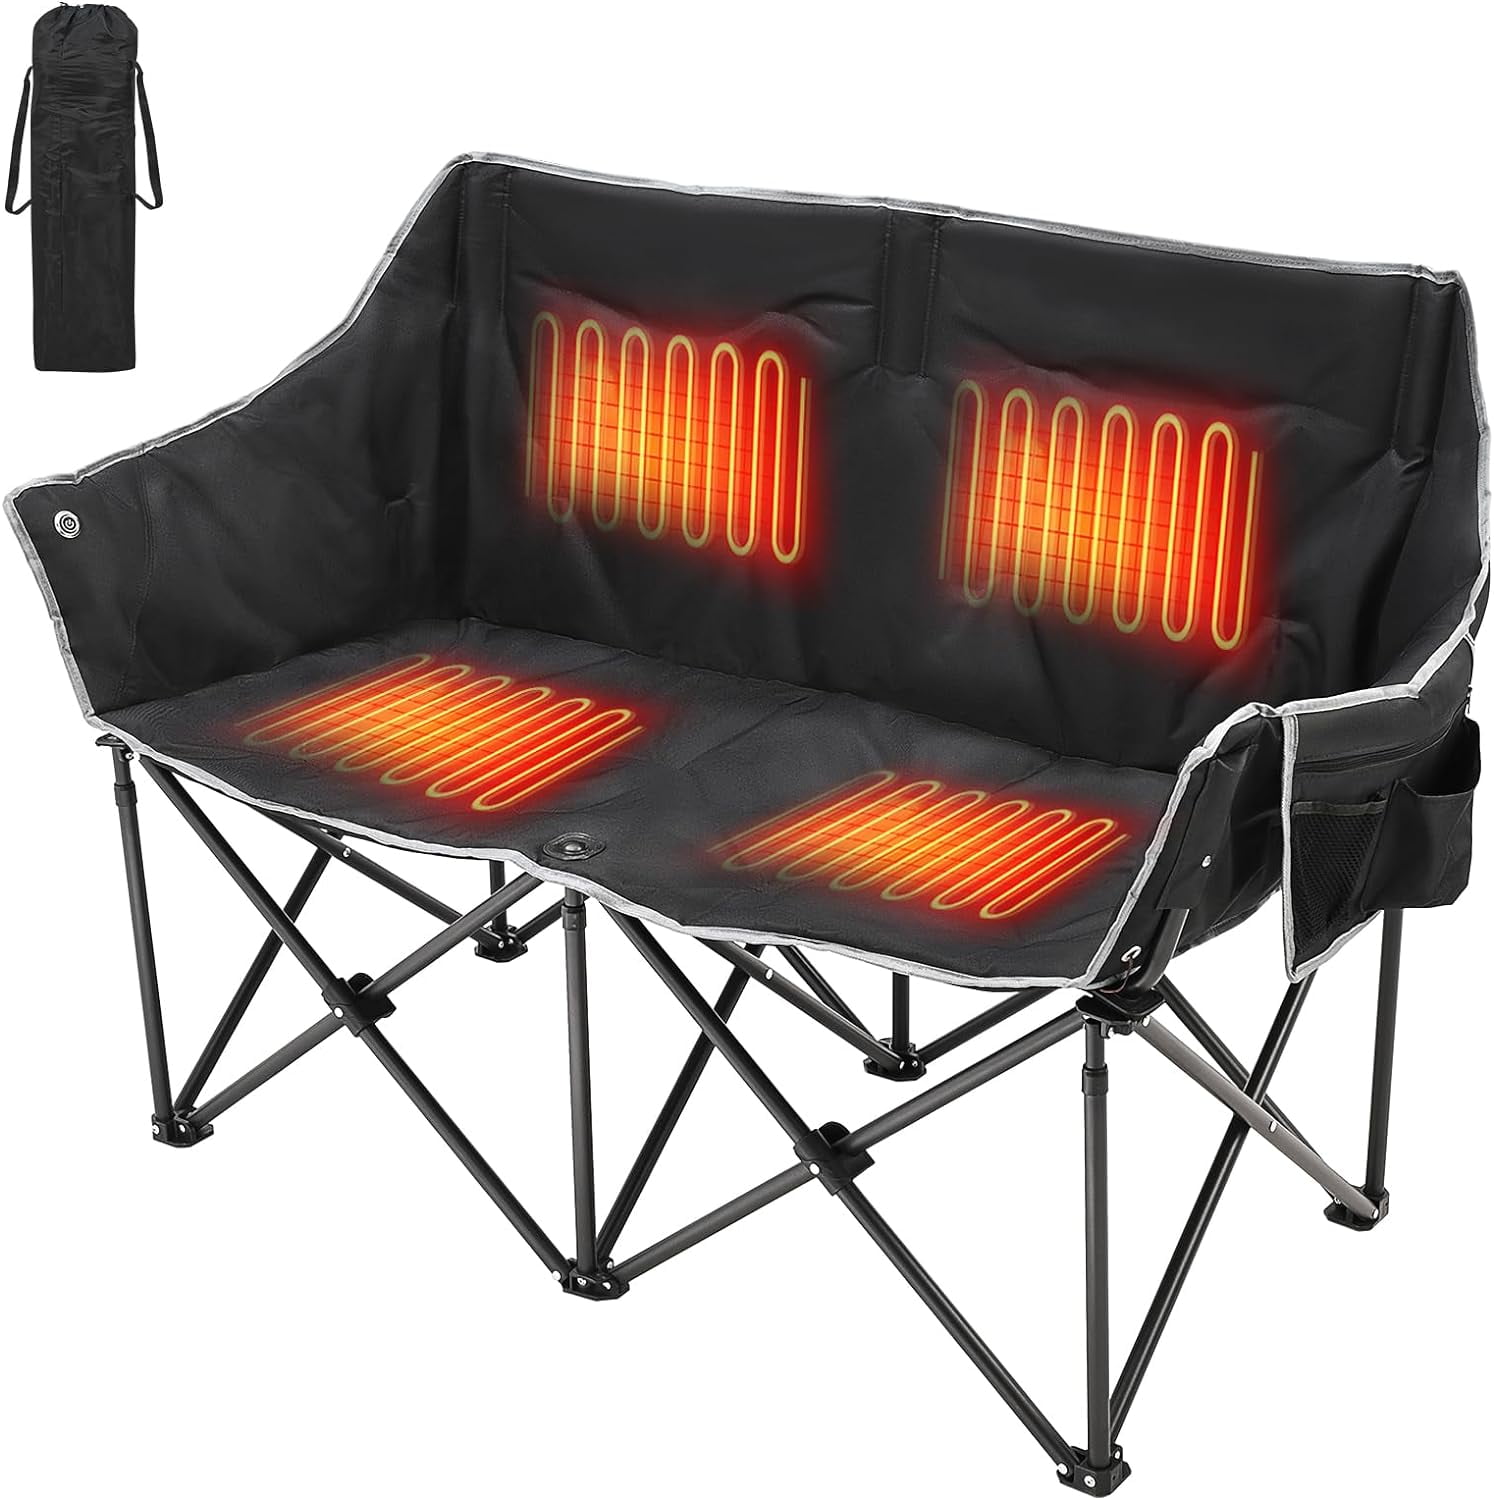  Heated Camping Chair Pad, Heated Seat Cushion, 17